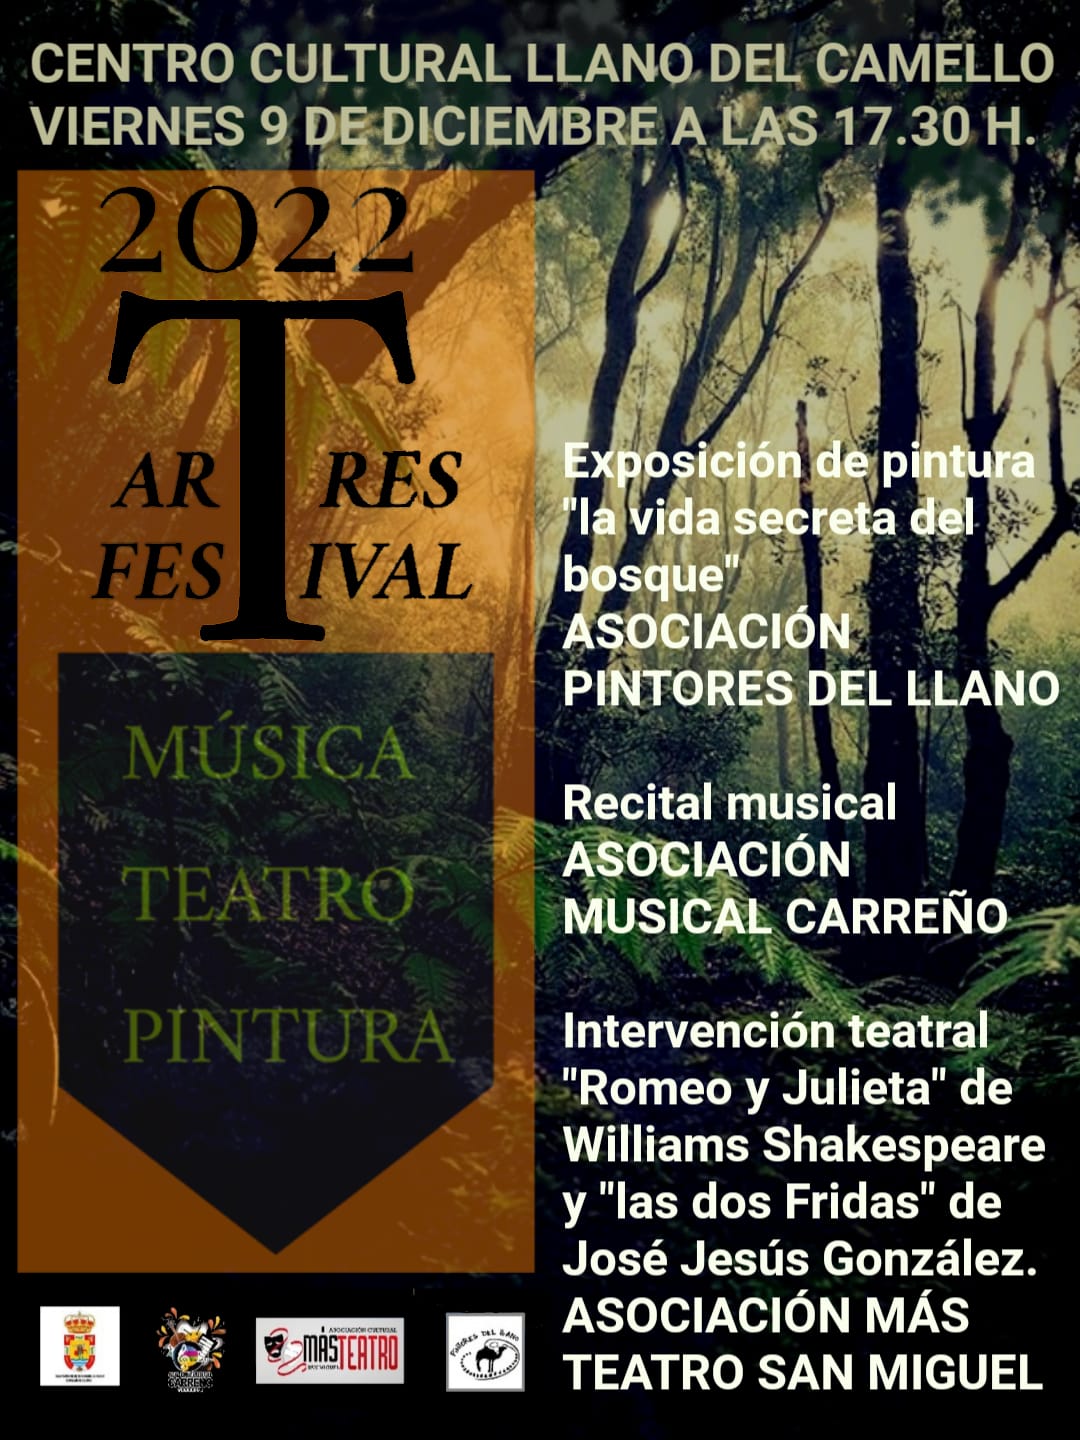 Festival Artres 2022